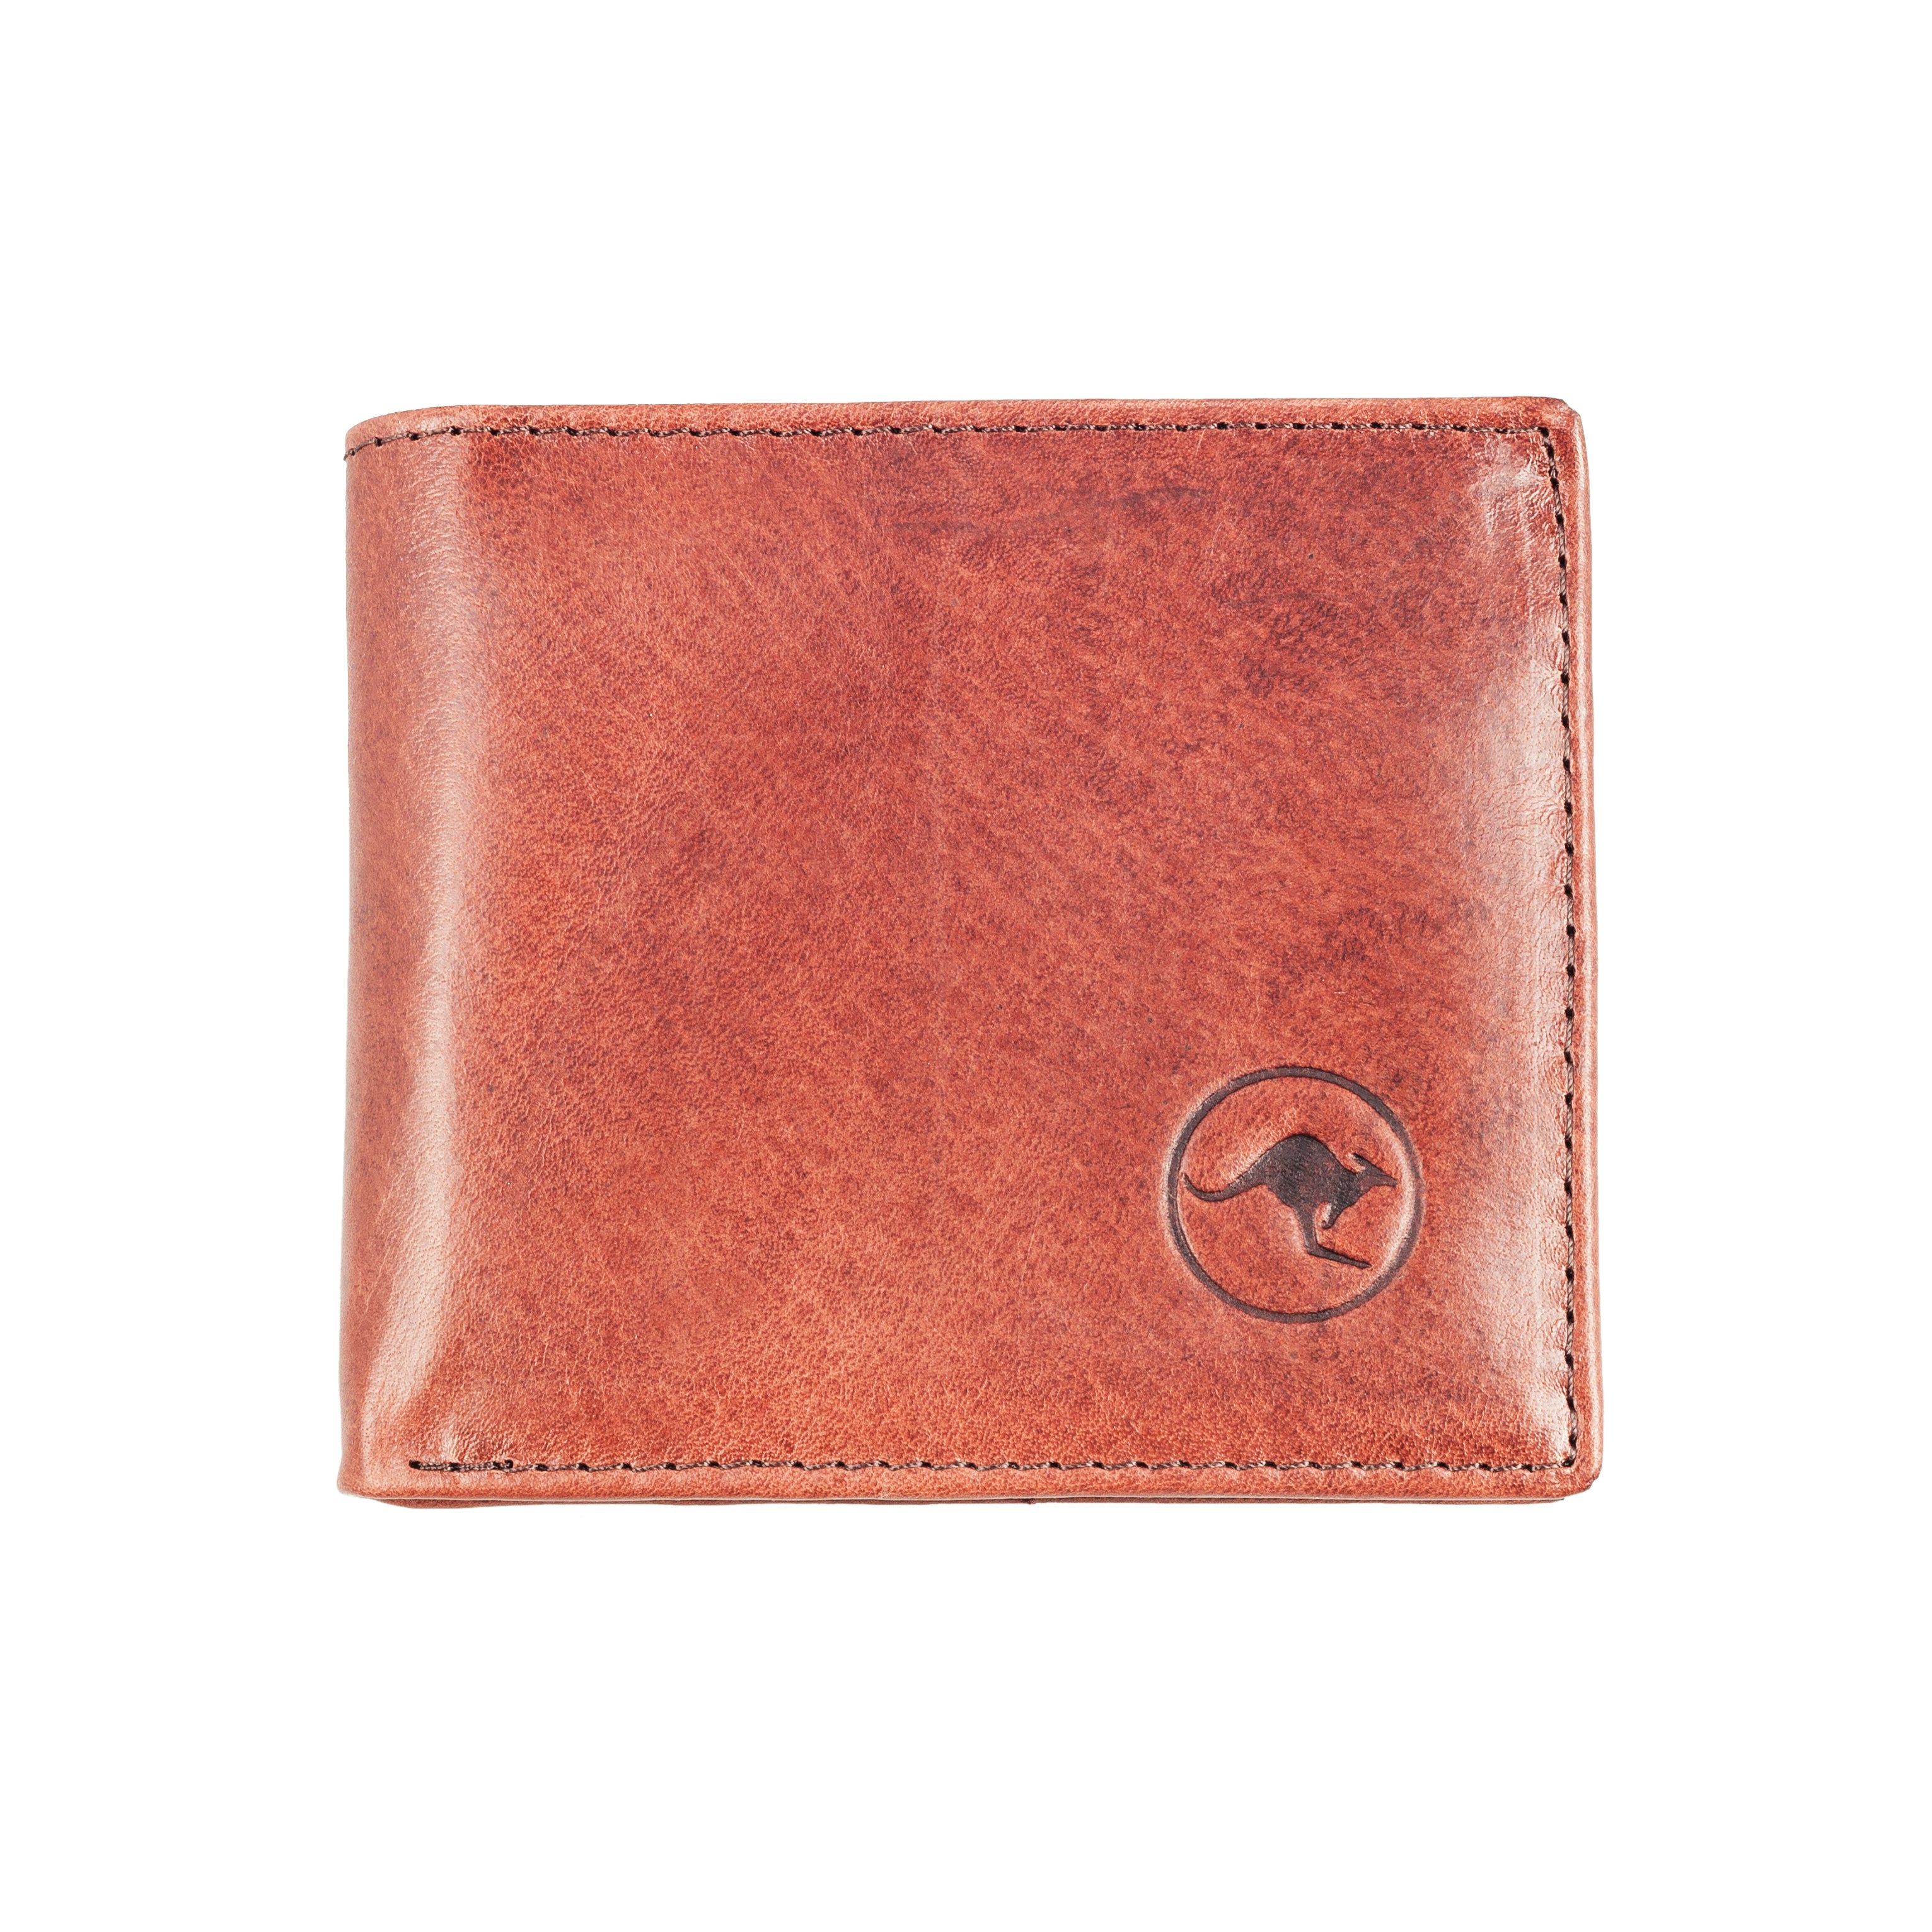 Buy Genuine Kangaroo Leather Wallet RFID Protected, Slim Style,  Minimalistic Online in India - Etsy